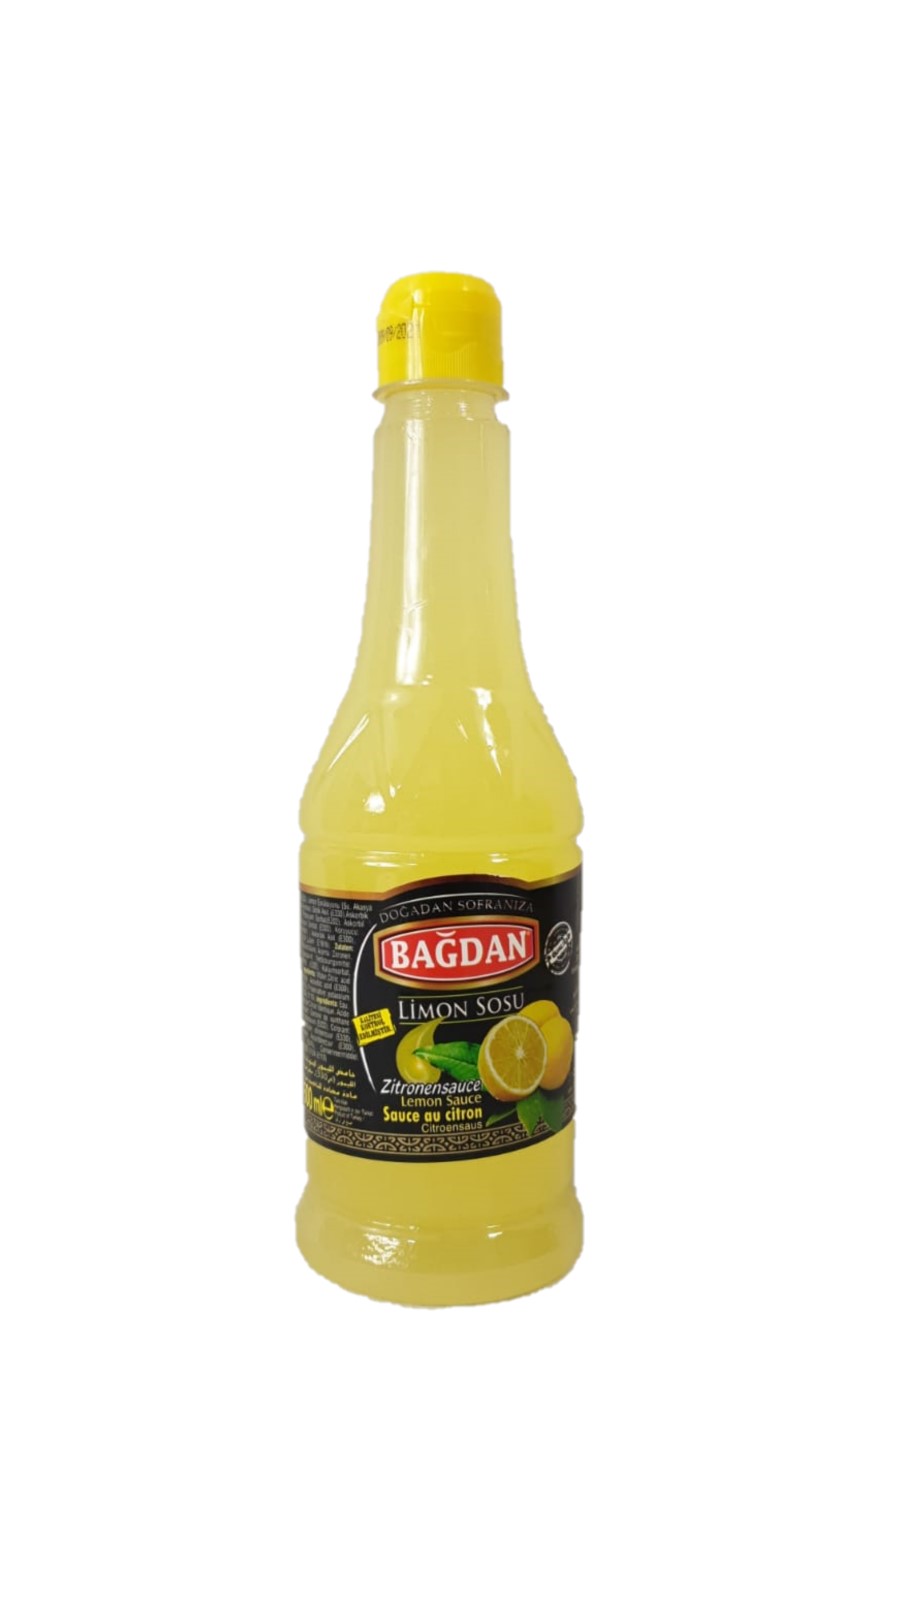 BAGDAN LIMON SOSU 20x500ML (sauce citron)